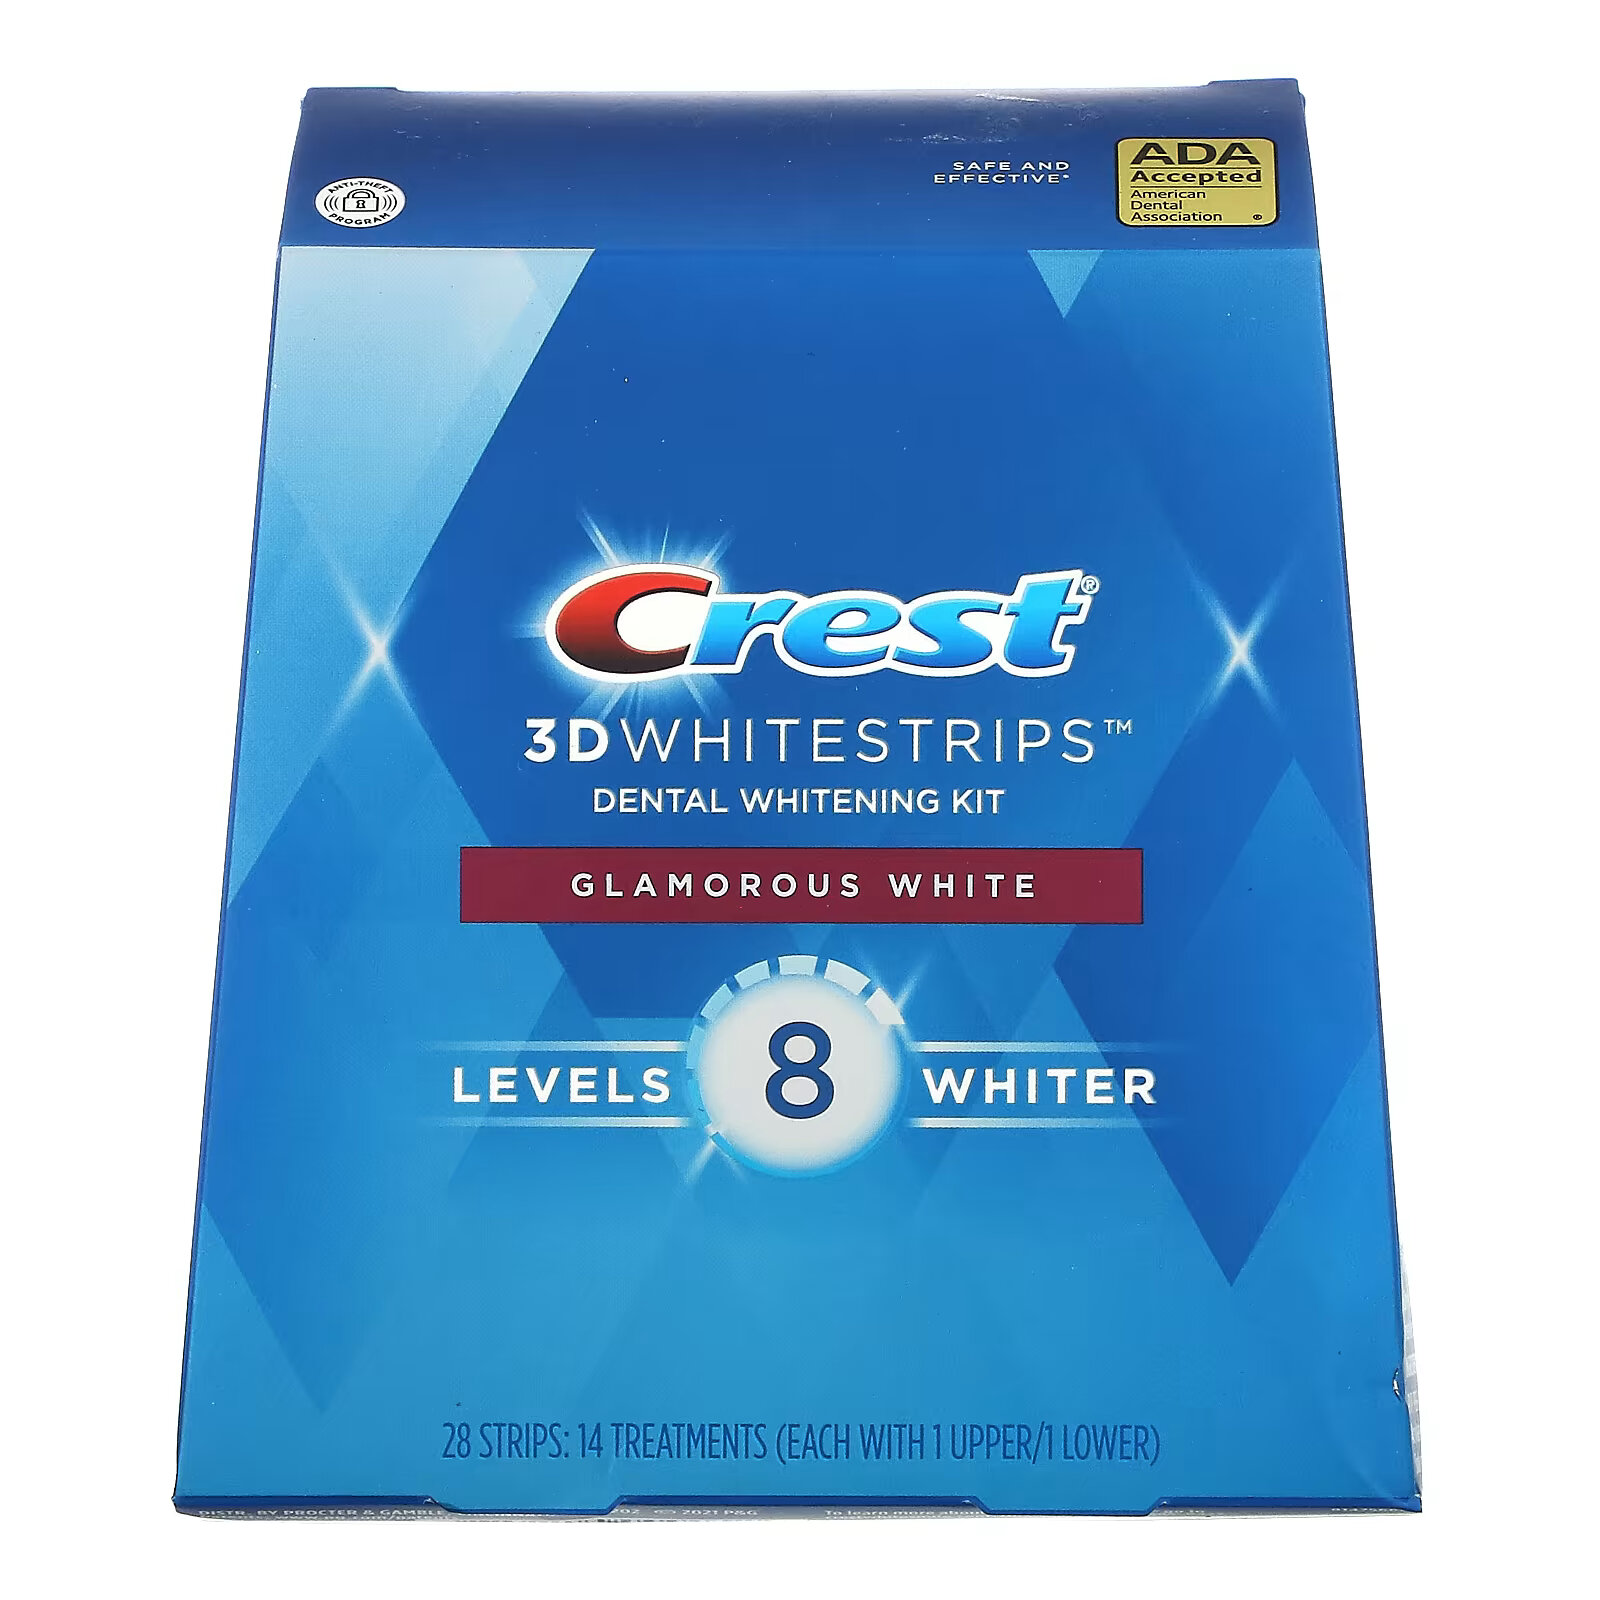 Crest, 3D Whitestrips, Glamorous White, комплект для отбеливания зубов, 28 полосок crest 3d whitestrips набор для отбеливания зубов 1 час экспресс 20 полосок